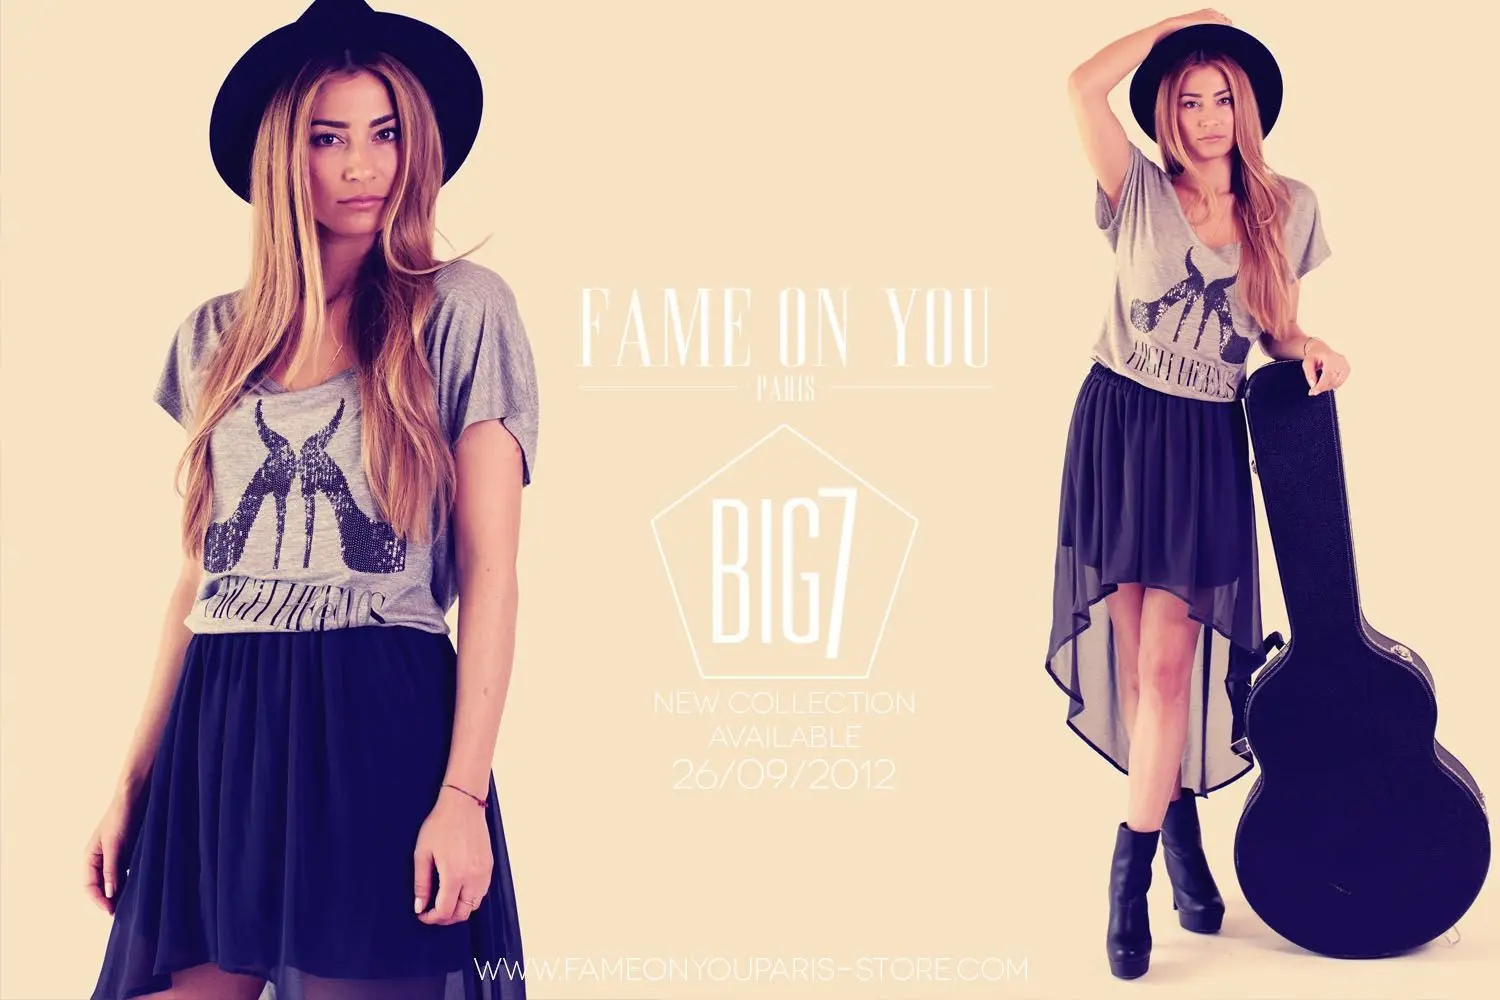 Fame On You : Big 7, la nouvelle collection